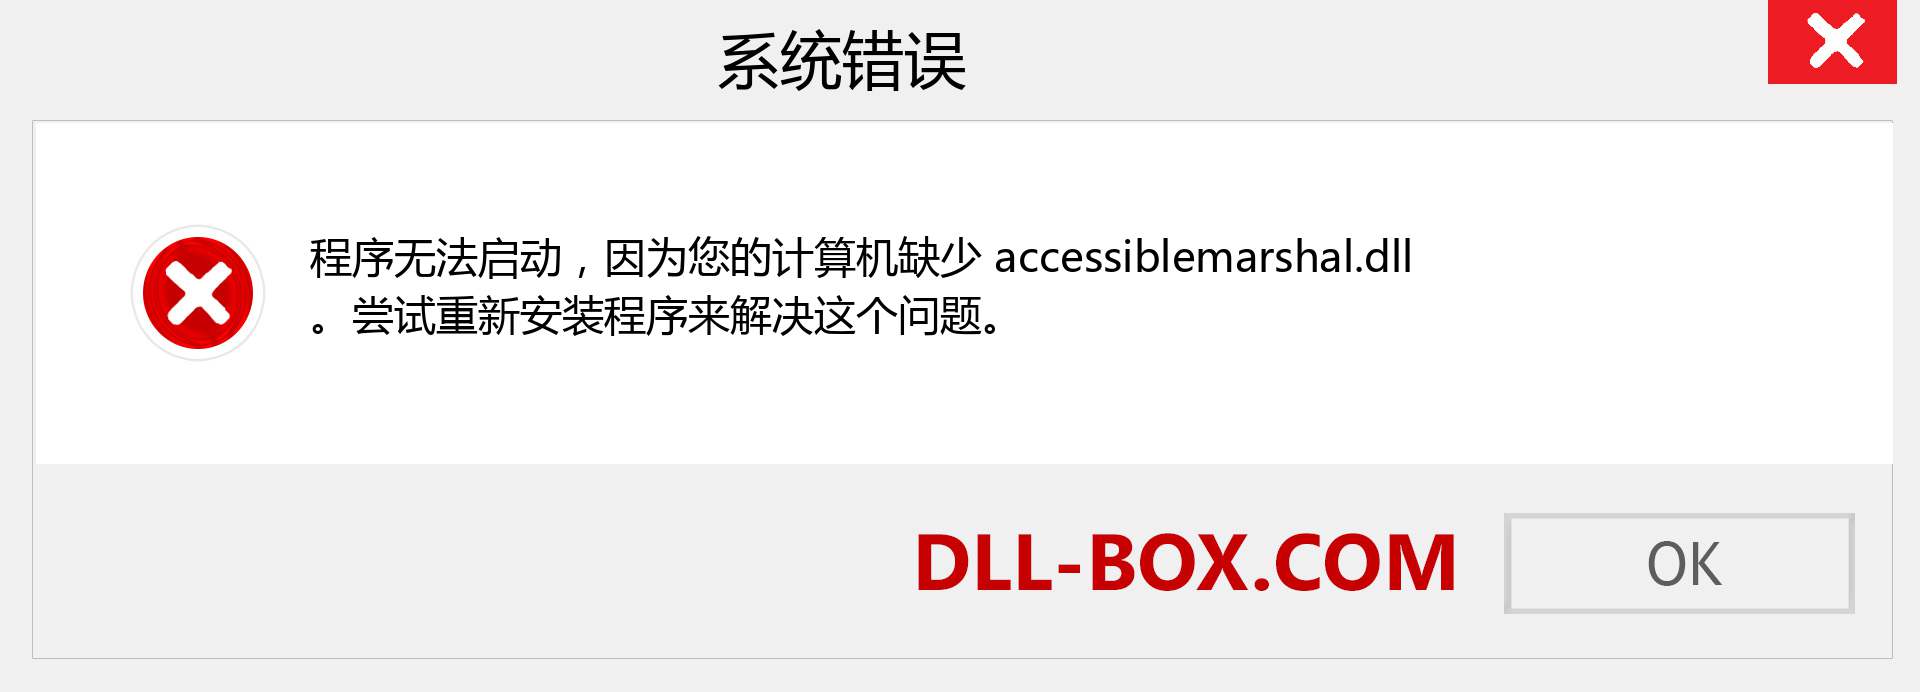 accessiblemarshal.dll 文件丢失？。 适用于 Windows 7、8、10 的下载 - 修复 Windows、照片、图像上的 accessiblemarshal dll 丢失错误